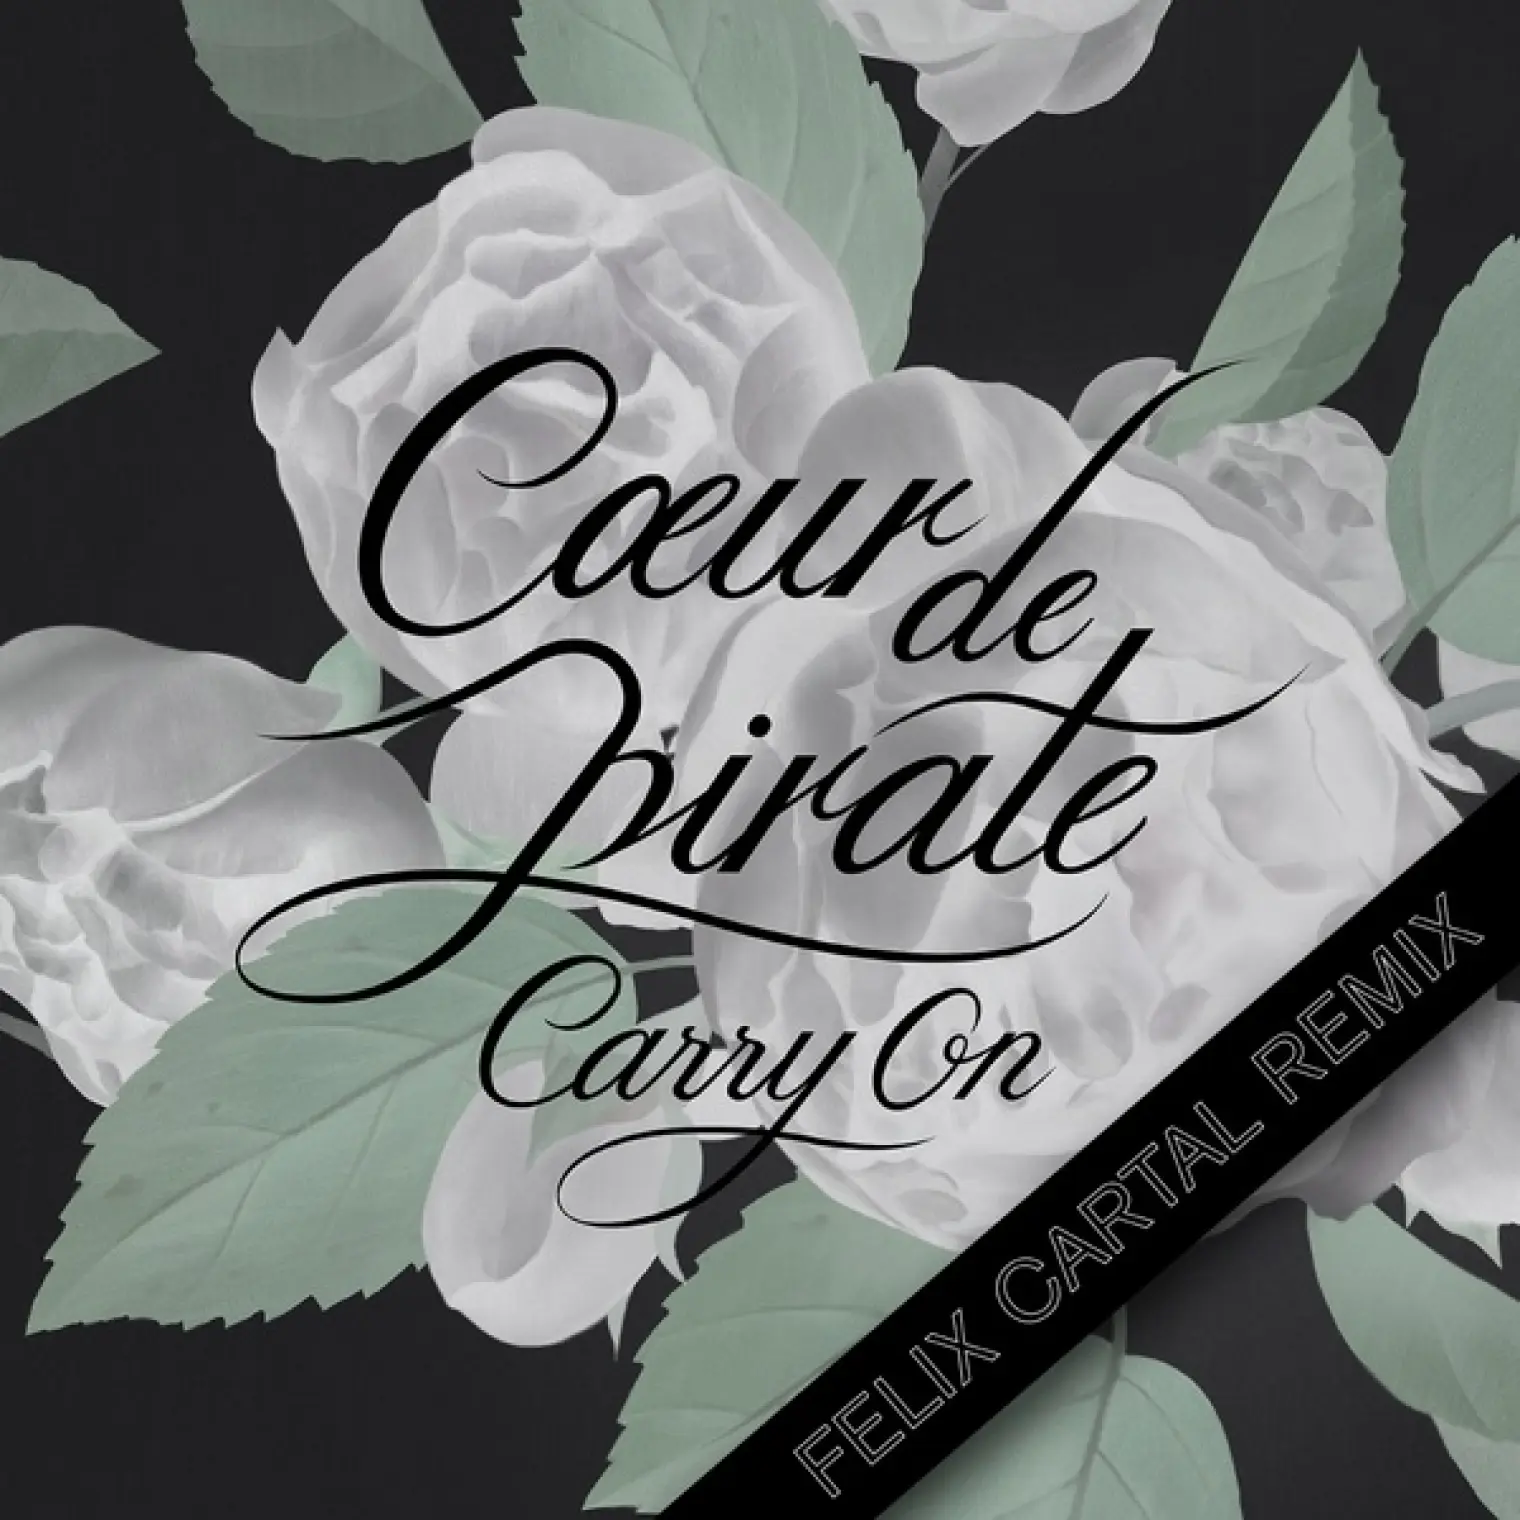 Carry On (Felix Cartal Remix) -  Coeur De Pirate 